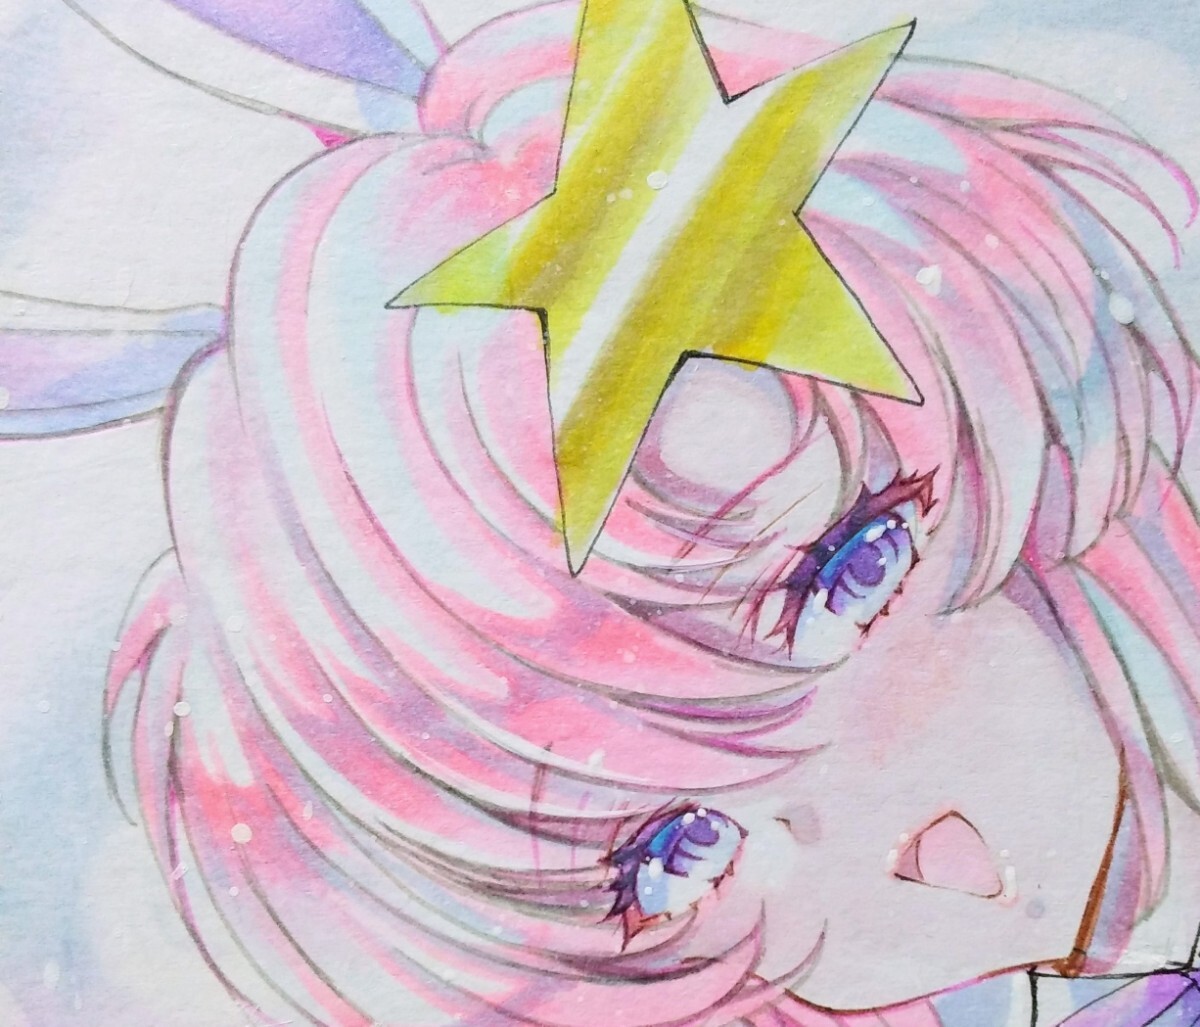 Farbiges Papier [Meer Campbell Bunny Gundam] Bunny Girl Doujin Original handgezeichnete Illustration Mädchen Illustration, Comics, Anime-Waren, handgezeichnete Illustration